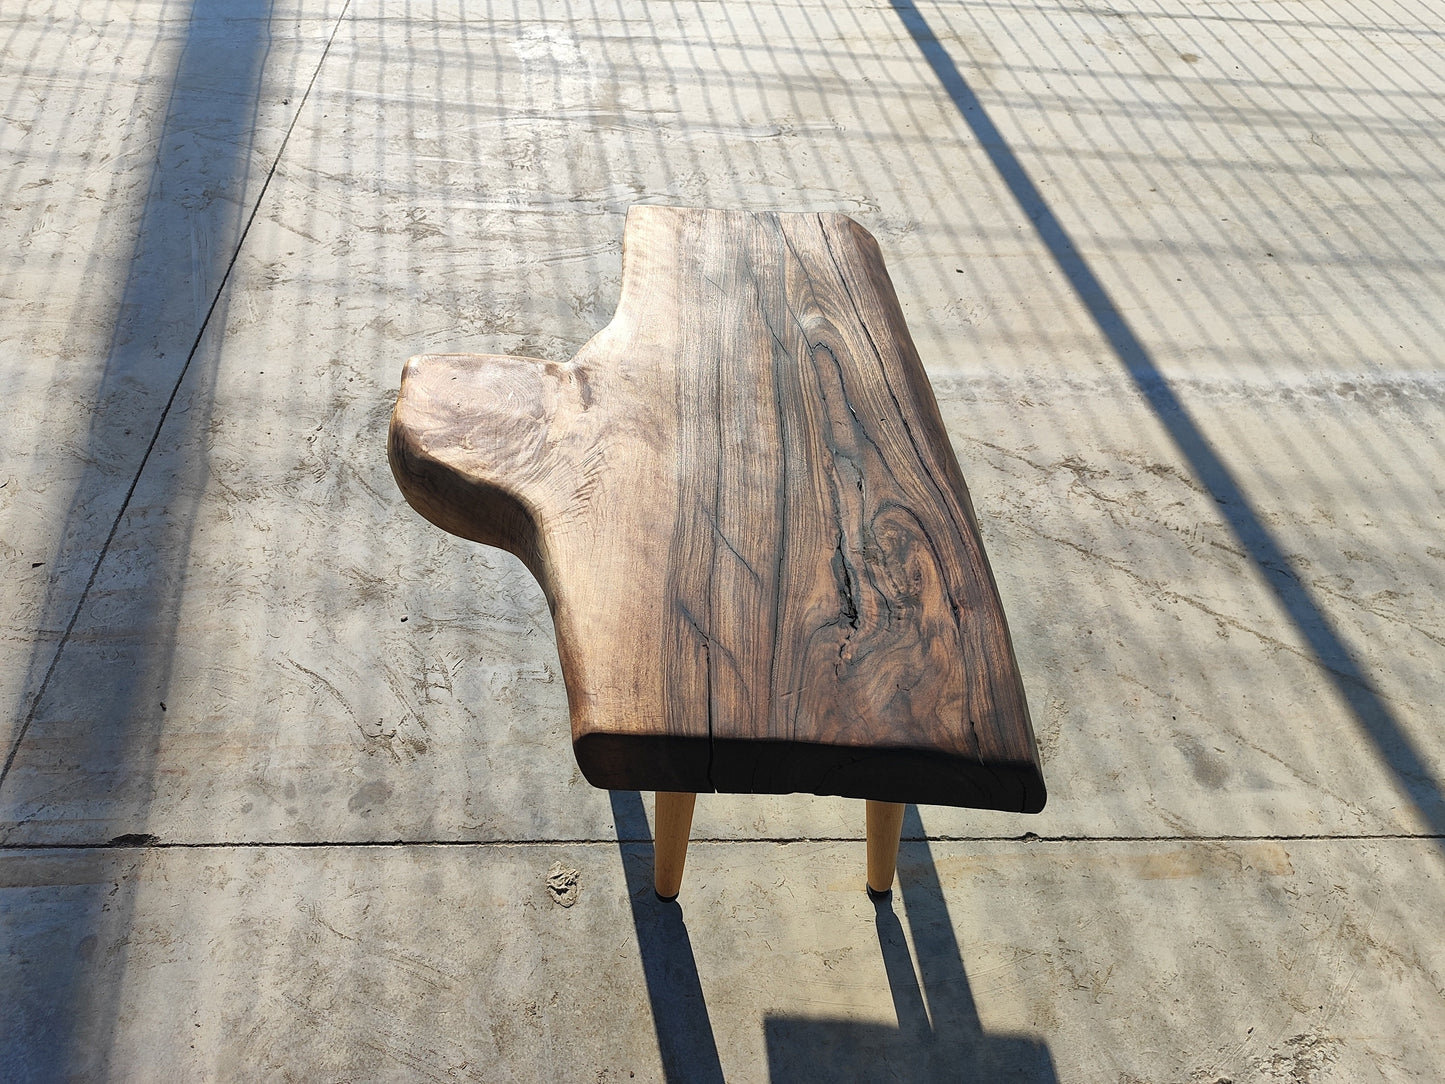 Rustic Handmade Wood Coffee Table - Unique Walnut (WG-1039)